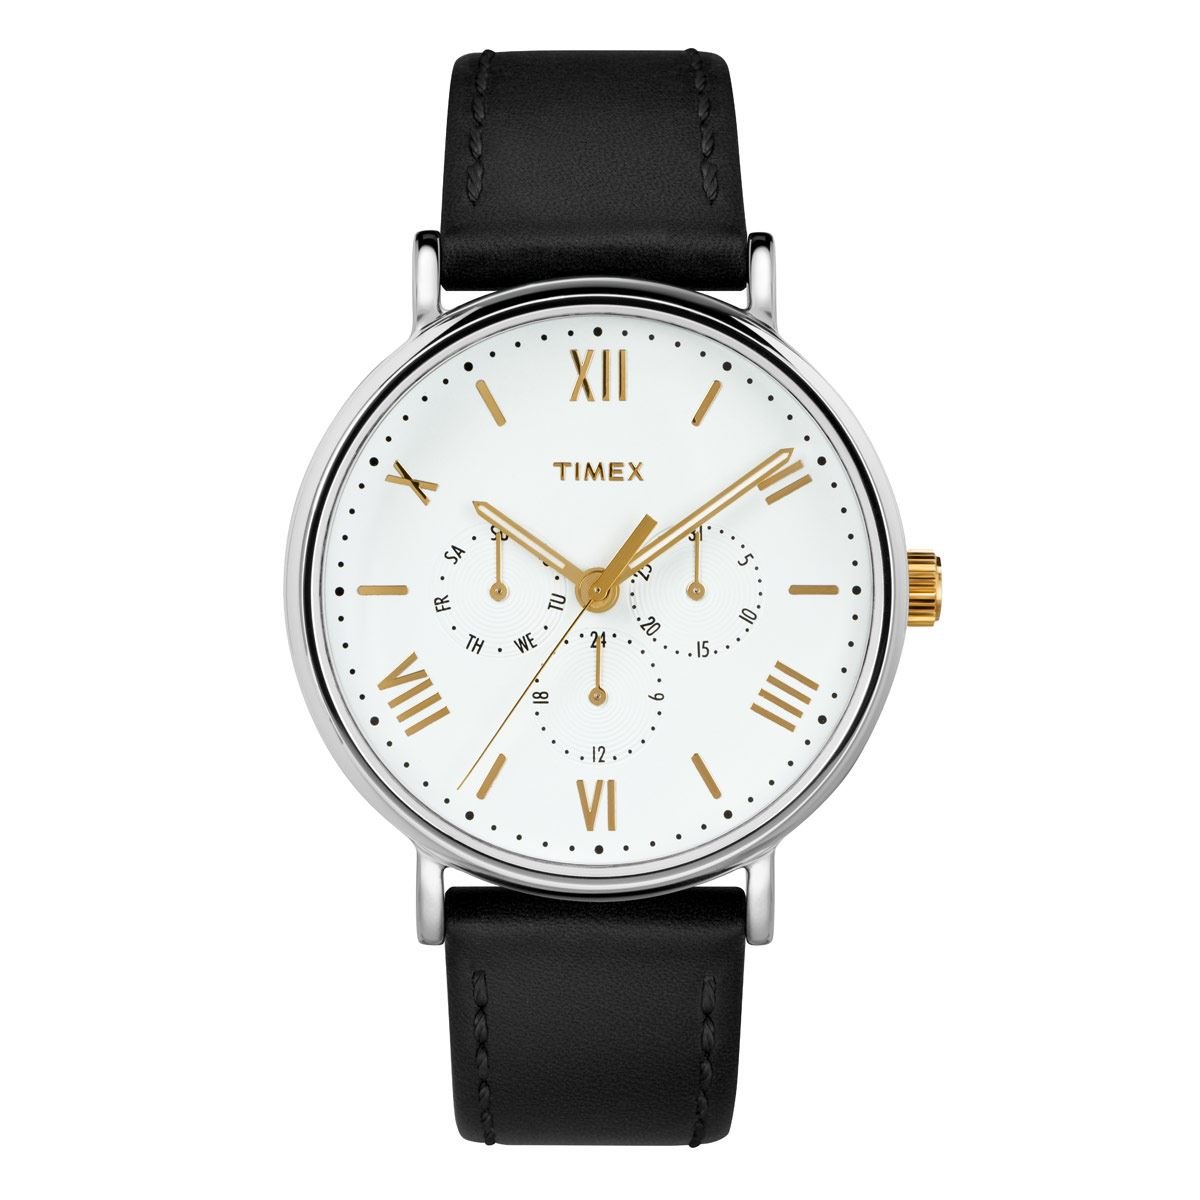 Reloj Timex Negro y Blanco Para Caballero